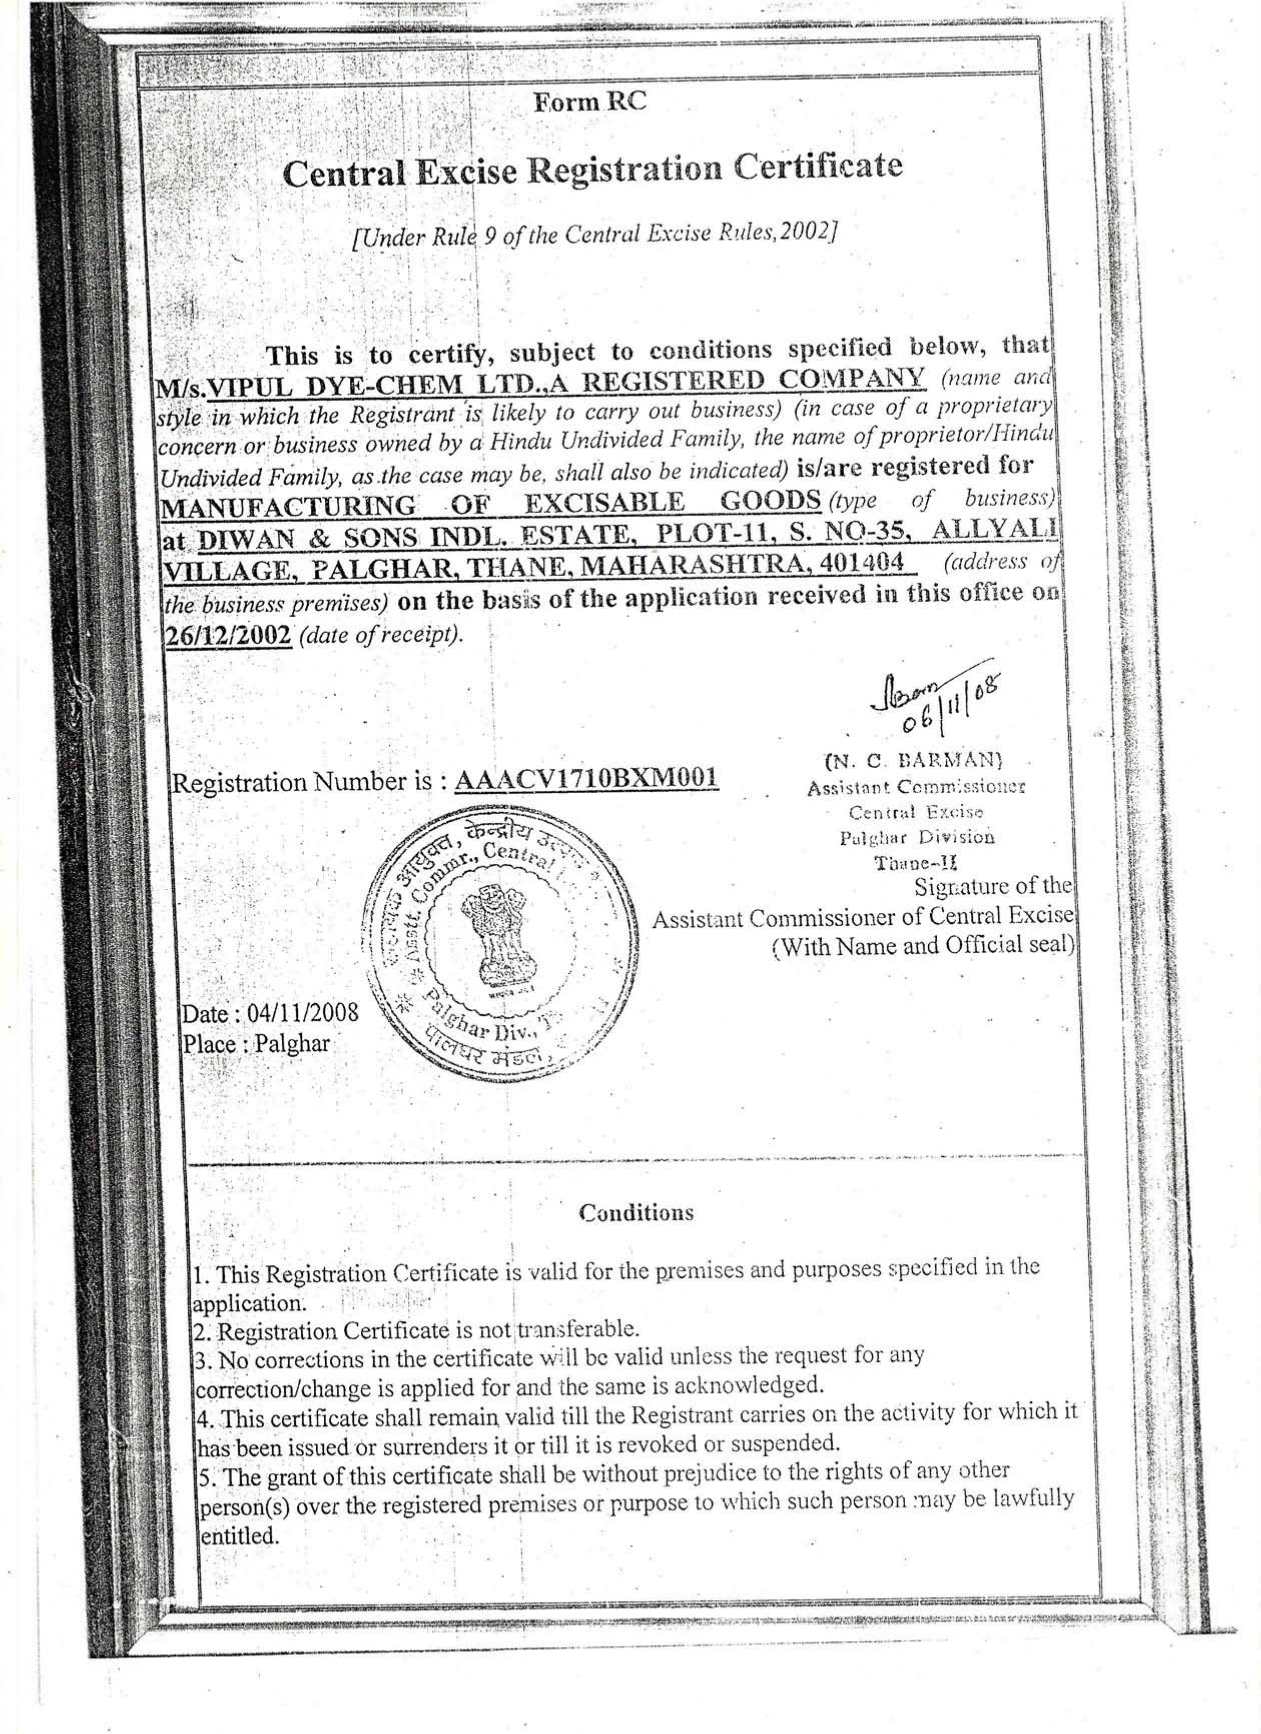 Central Excise Registration Certificate (Palghar)